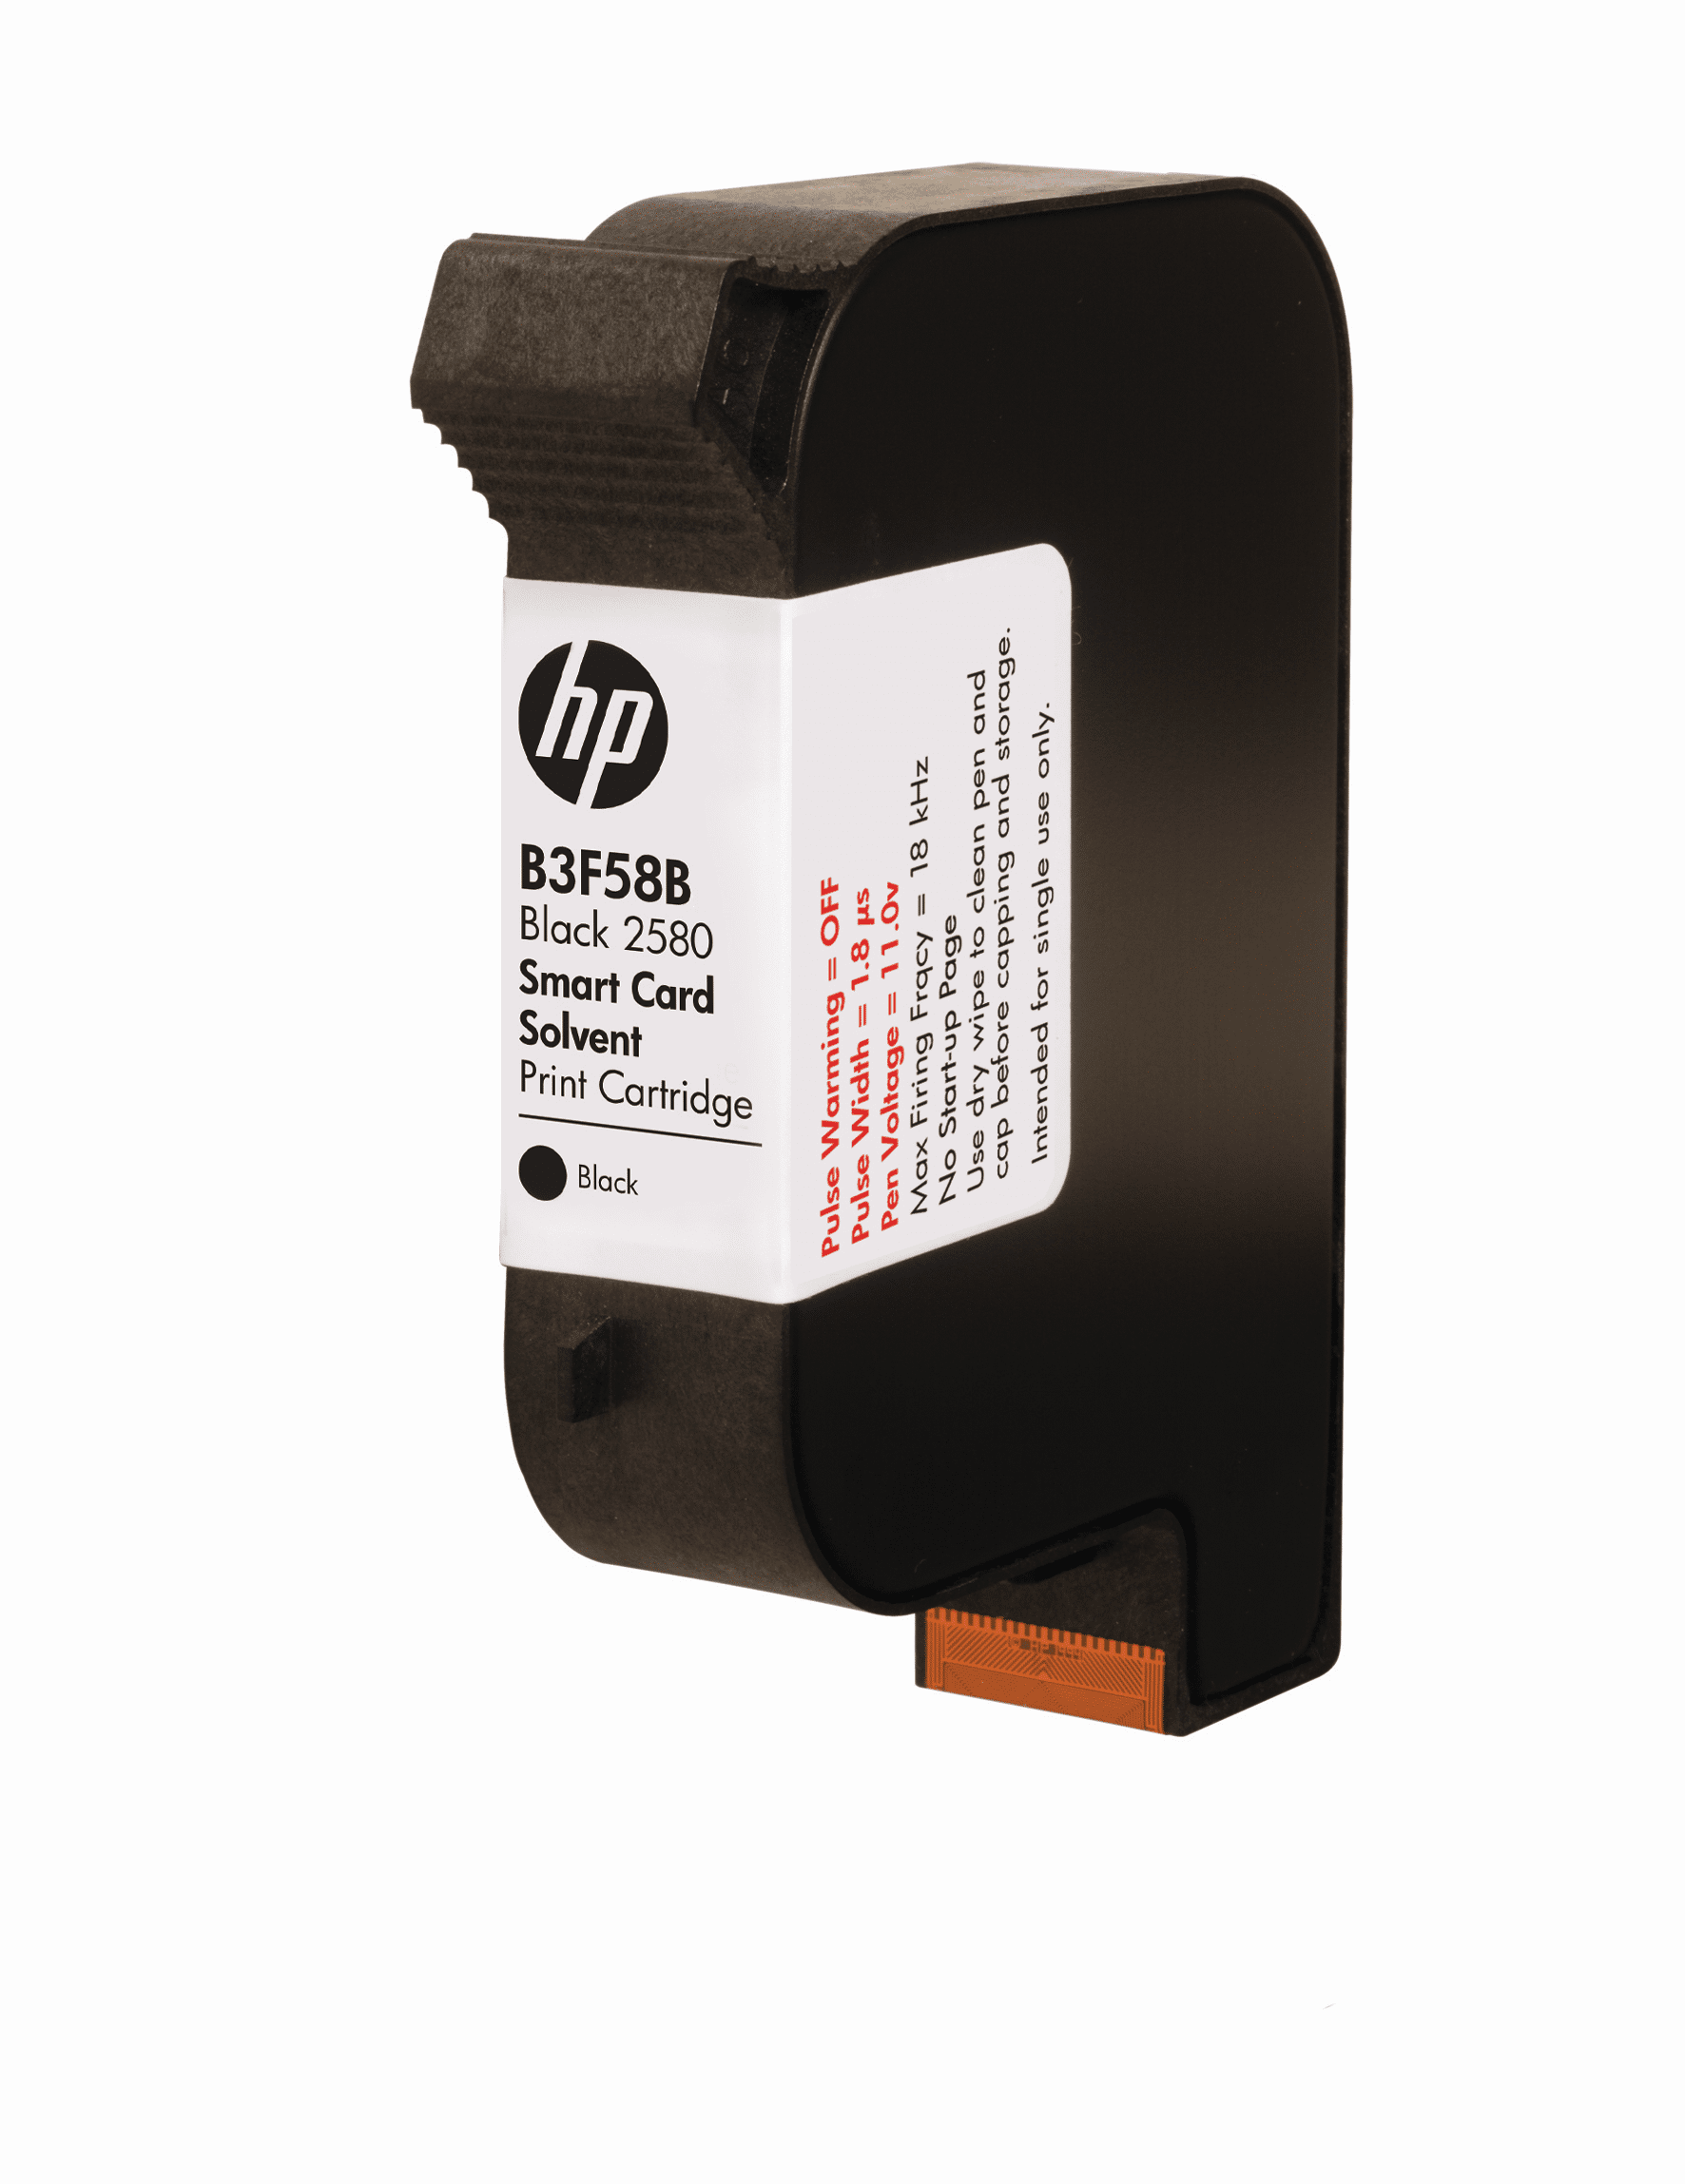 B3F58B 2580 Black Solvent Print Cartridge